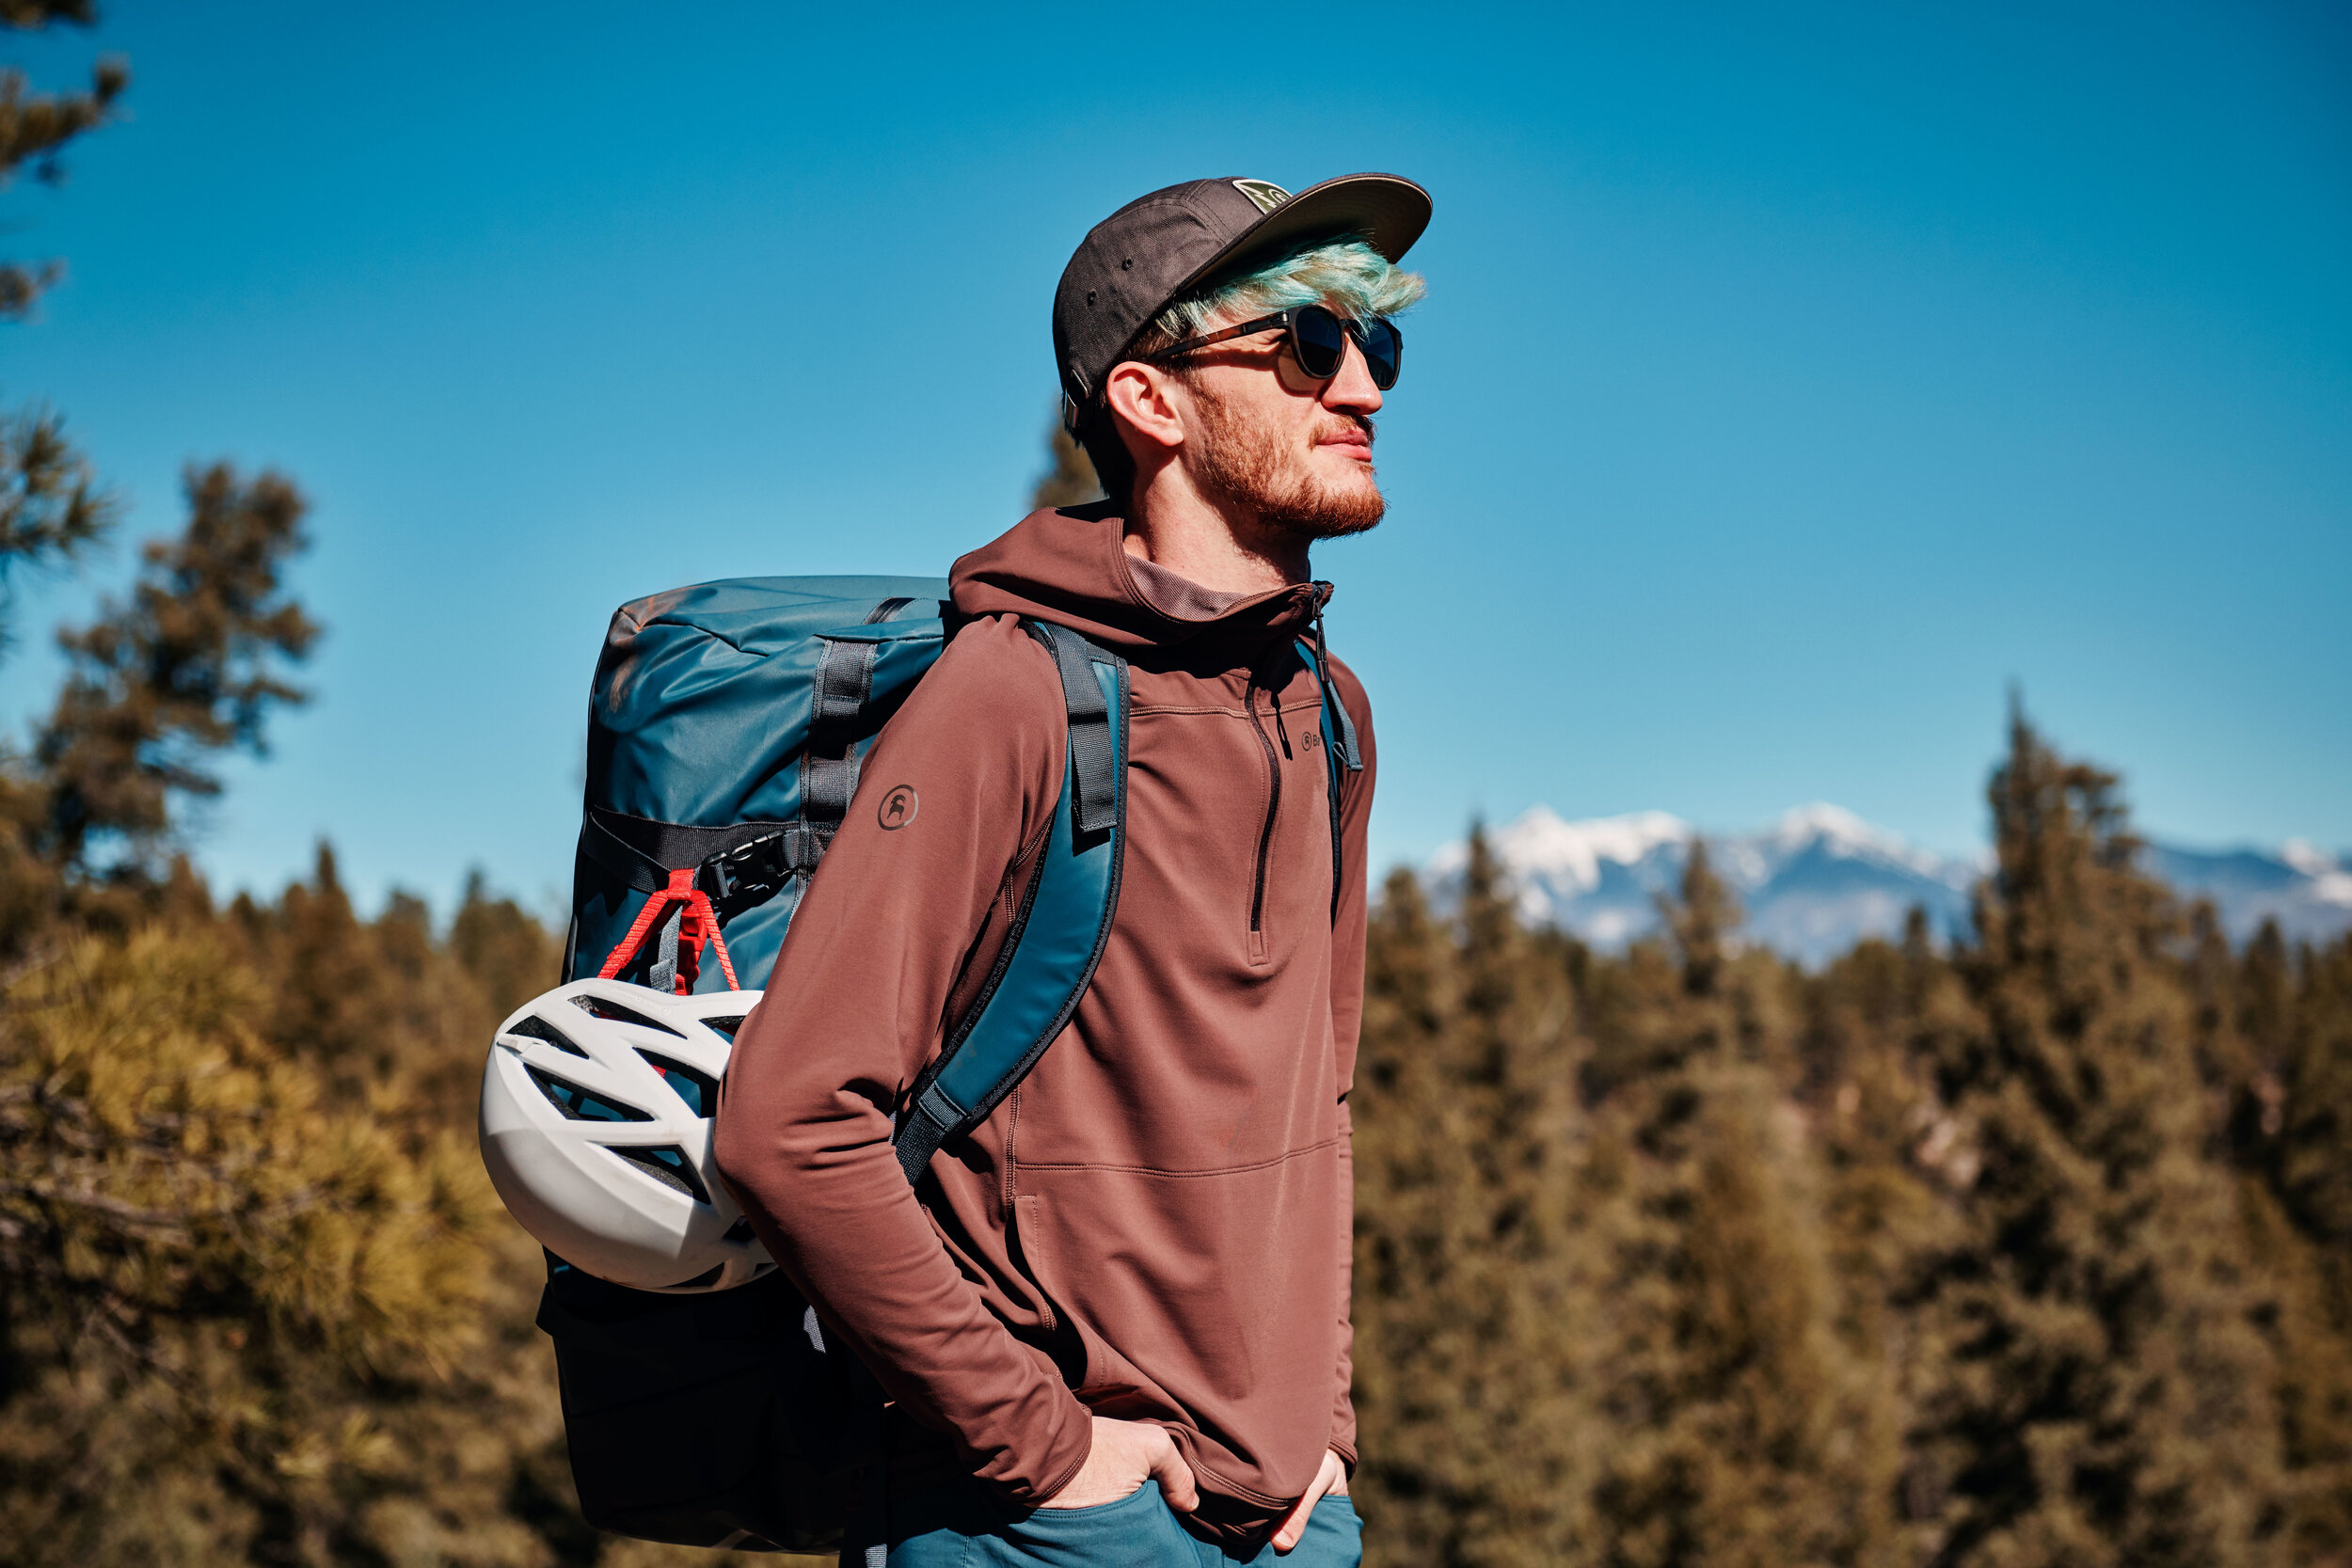   Backcountry Gear &amp; Apparel SS ’20    Pursuits : Mountain Biking, Rock Climbing, Hiking, and Camping   Location : Sedona, AZ   Producer : Tyler Arrivillaga   Photographer : Jordan Haggard 